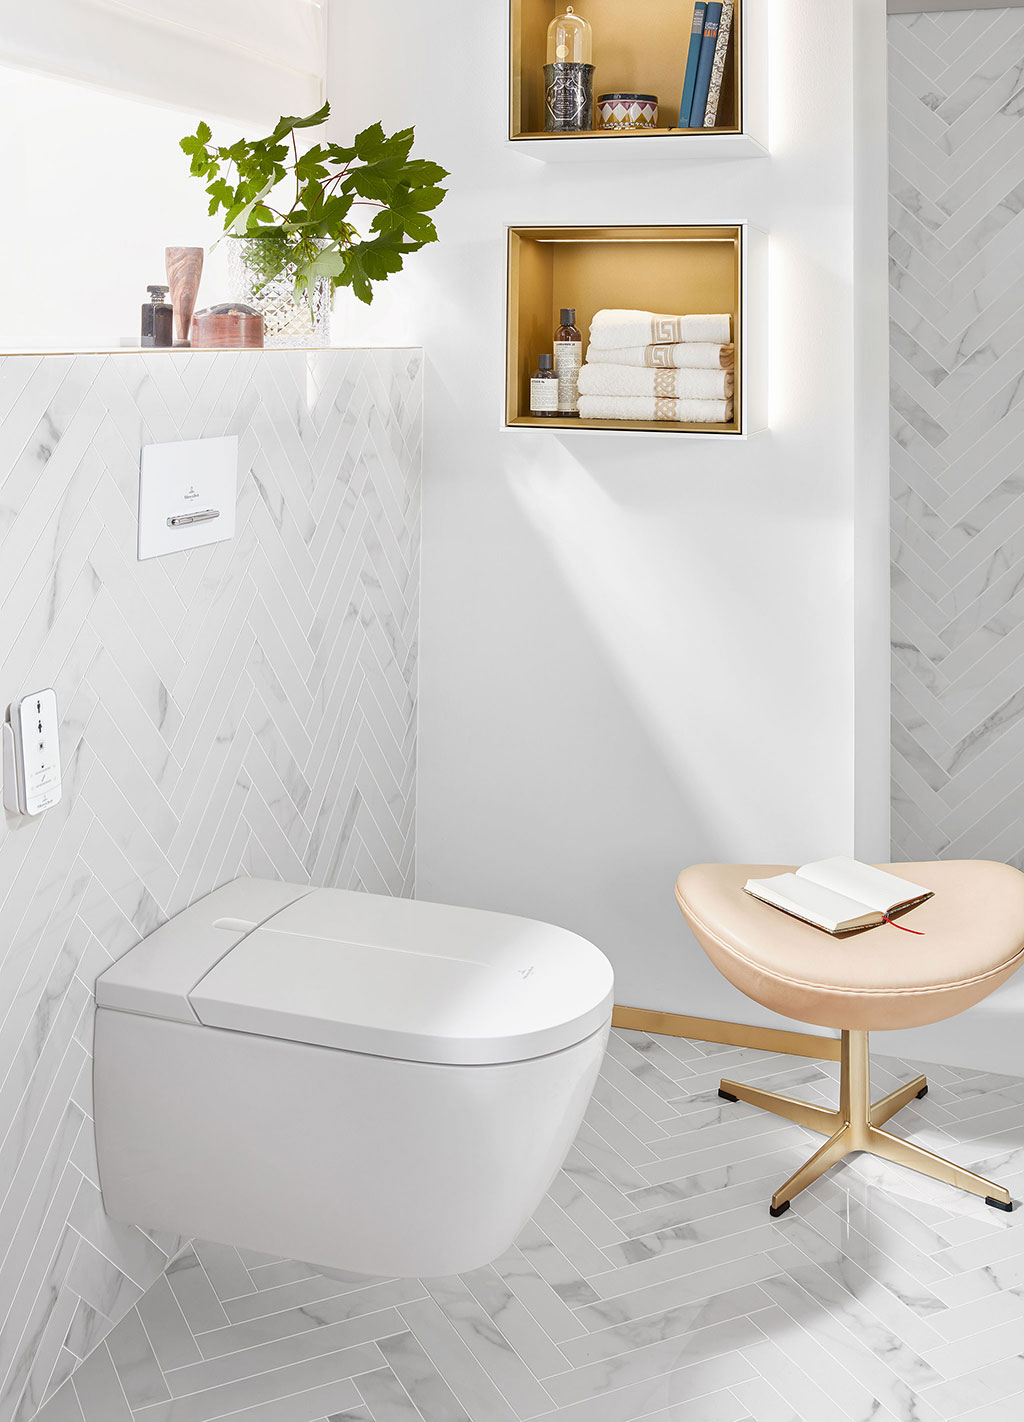 Zwart toilet en wit toilet Douche wc Villeroy & Boch | Stek Magazine